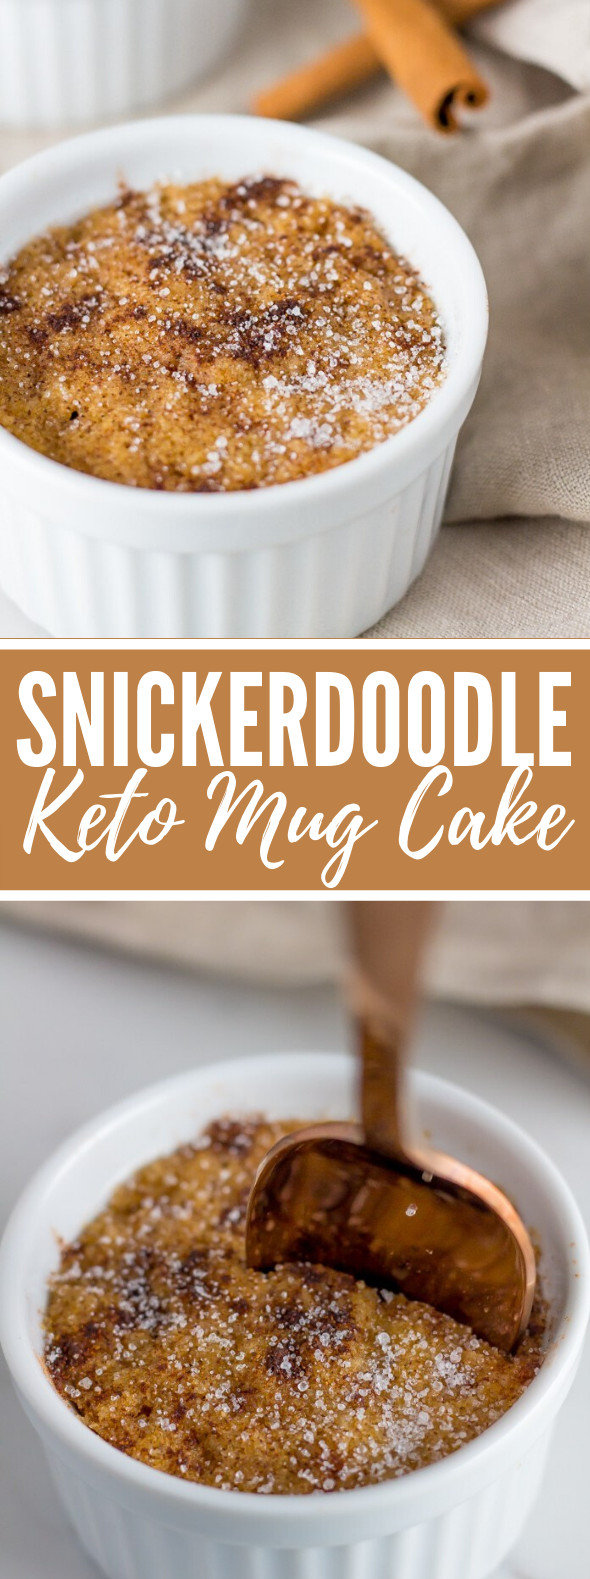 Keto Snickerdoodle Mug Cake
 Snickerdoodle Keto Mug Cake healthy lowcarb